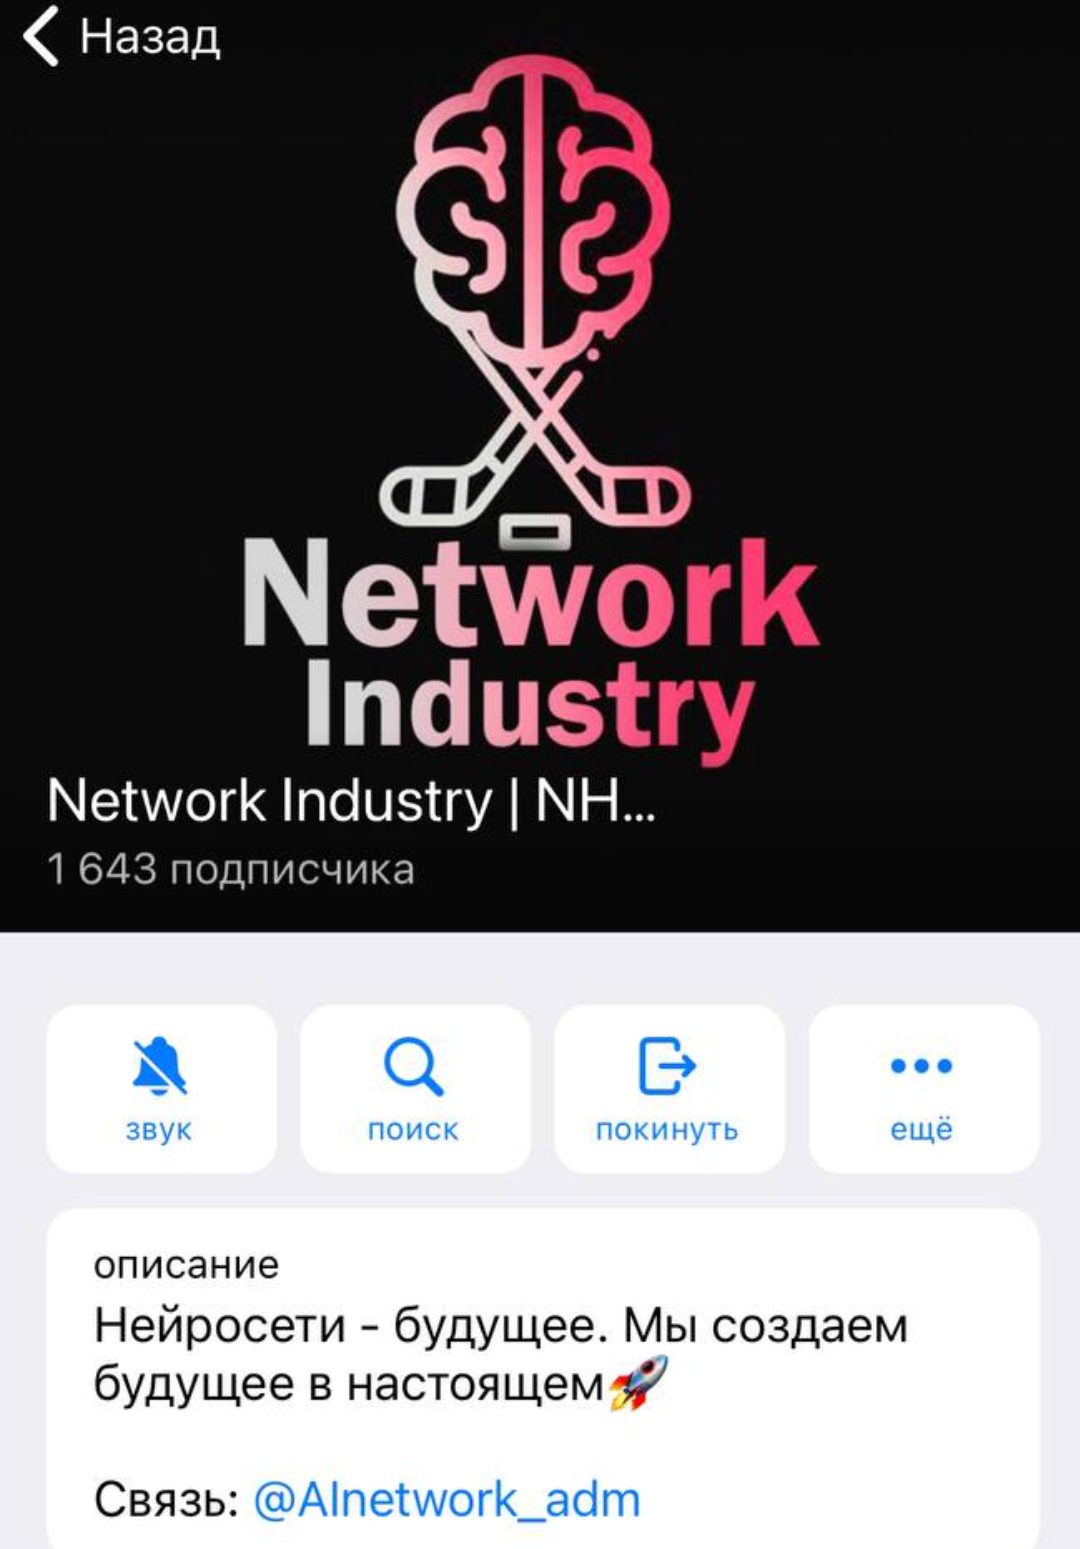 Network Industry